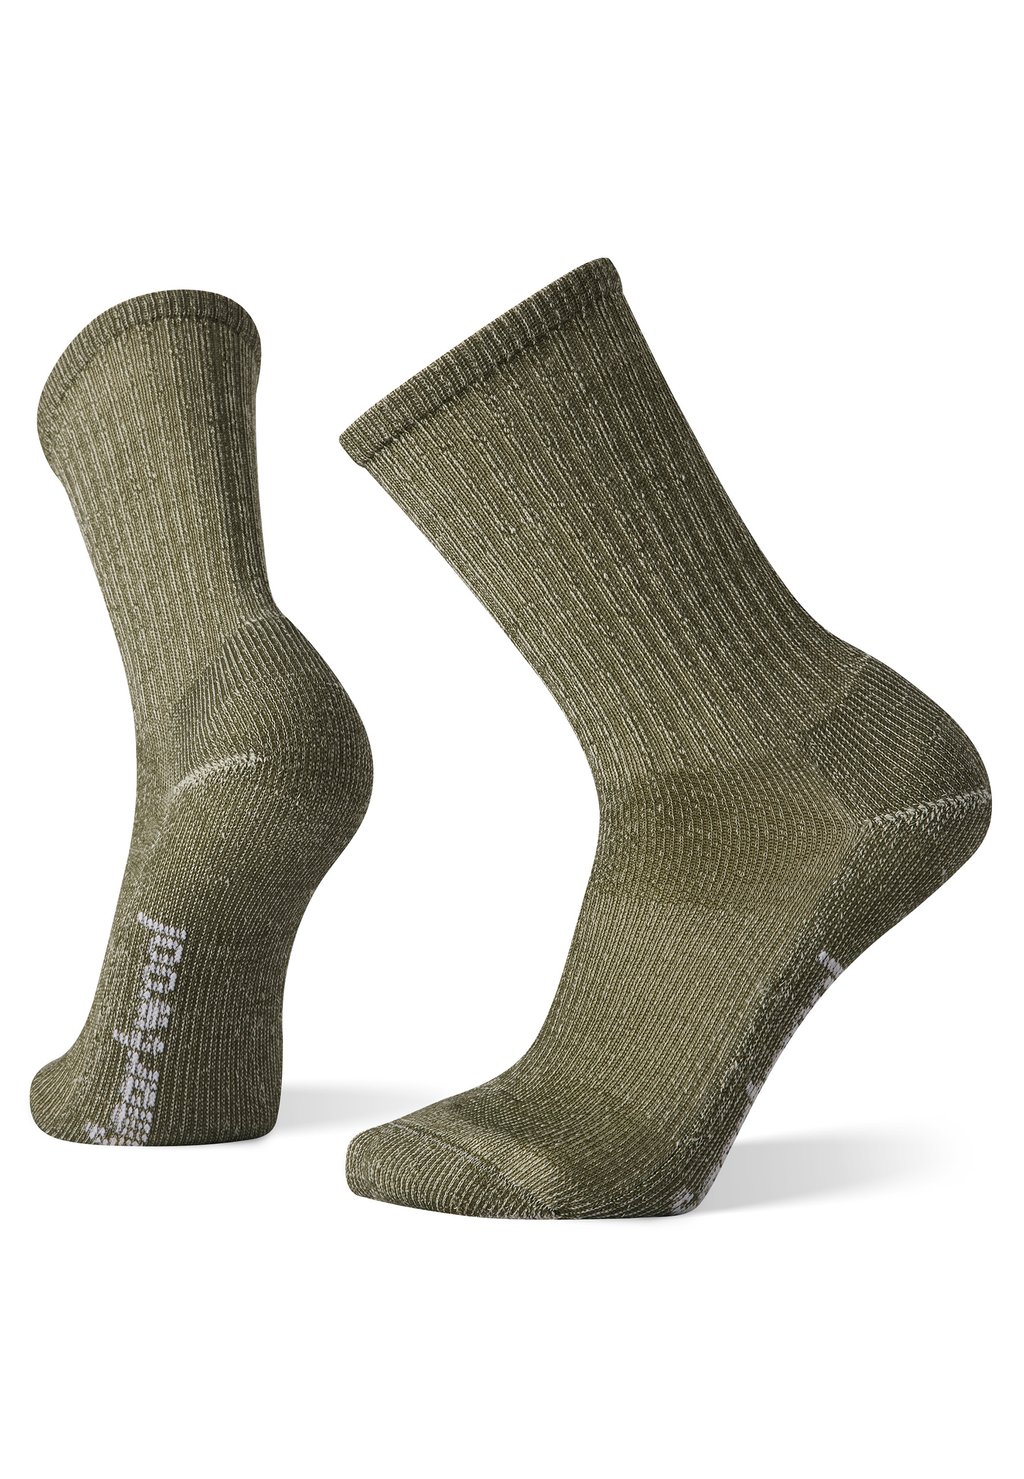 Спортивные носки Smartwool брюки brixton alameda цвет military olive